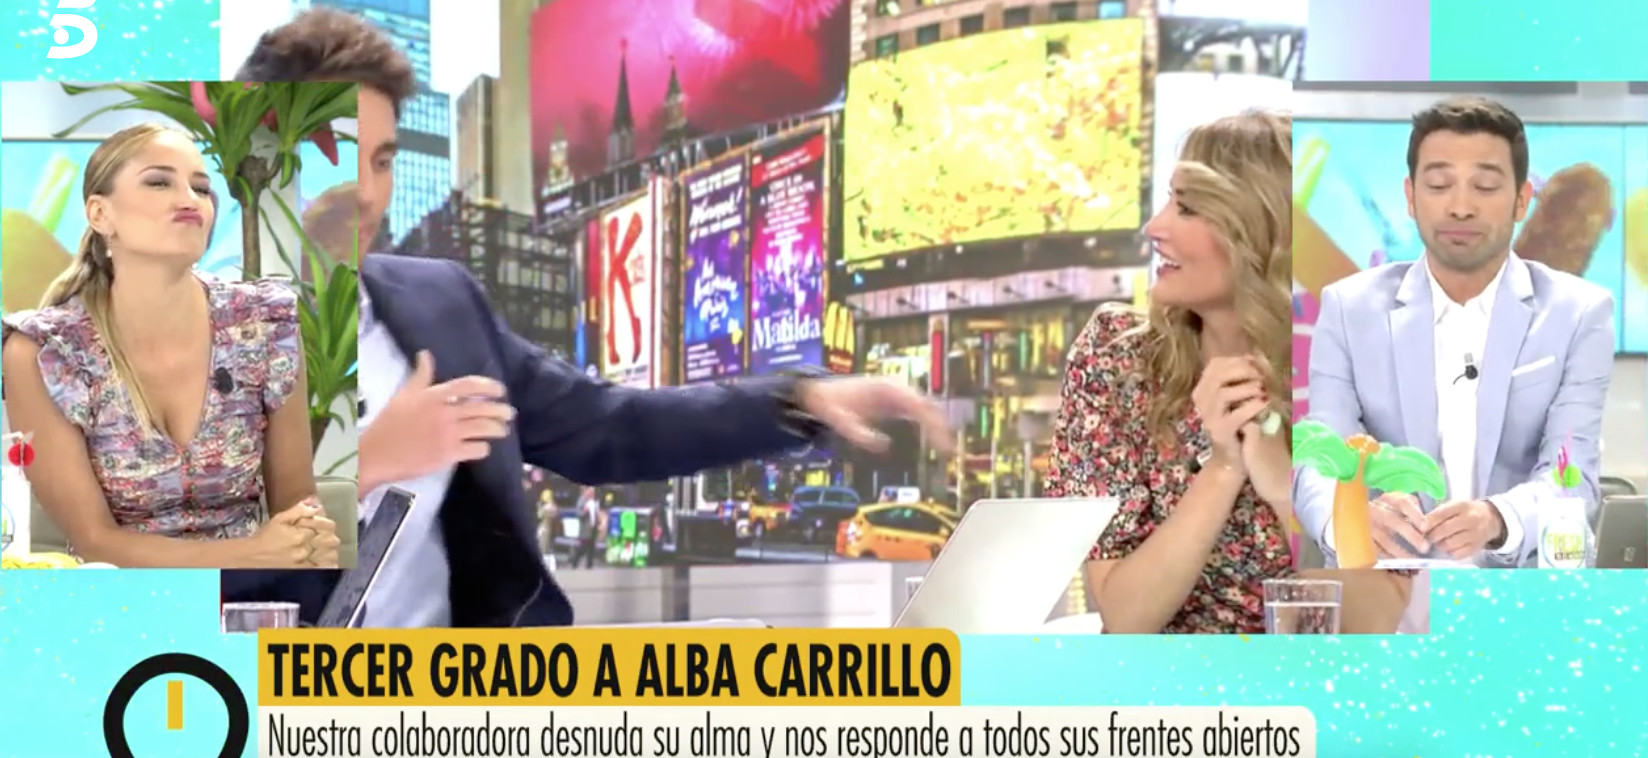 Alba Carrillo se sincera hablando del periodista Santi Burgoa / MEDIASET